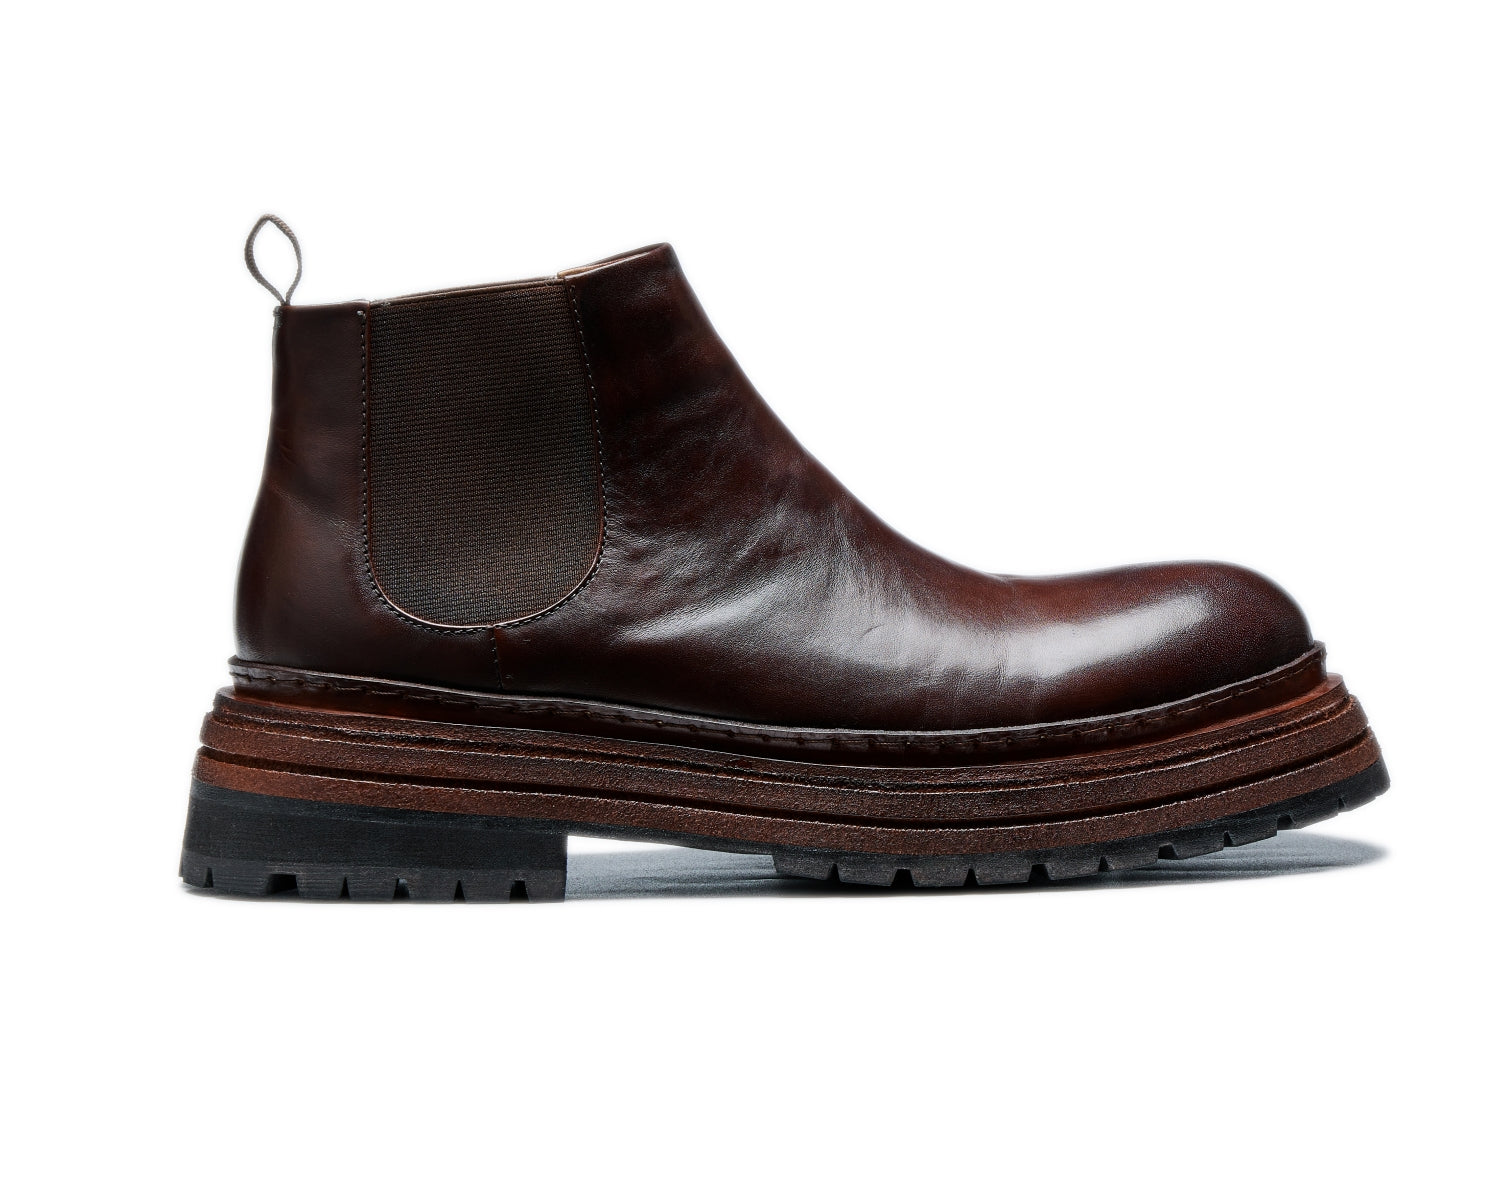 Men's Goodyear welt horsehide full-grain leather Chelsea boots in various styles10